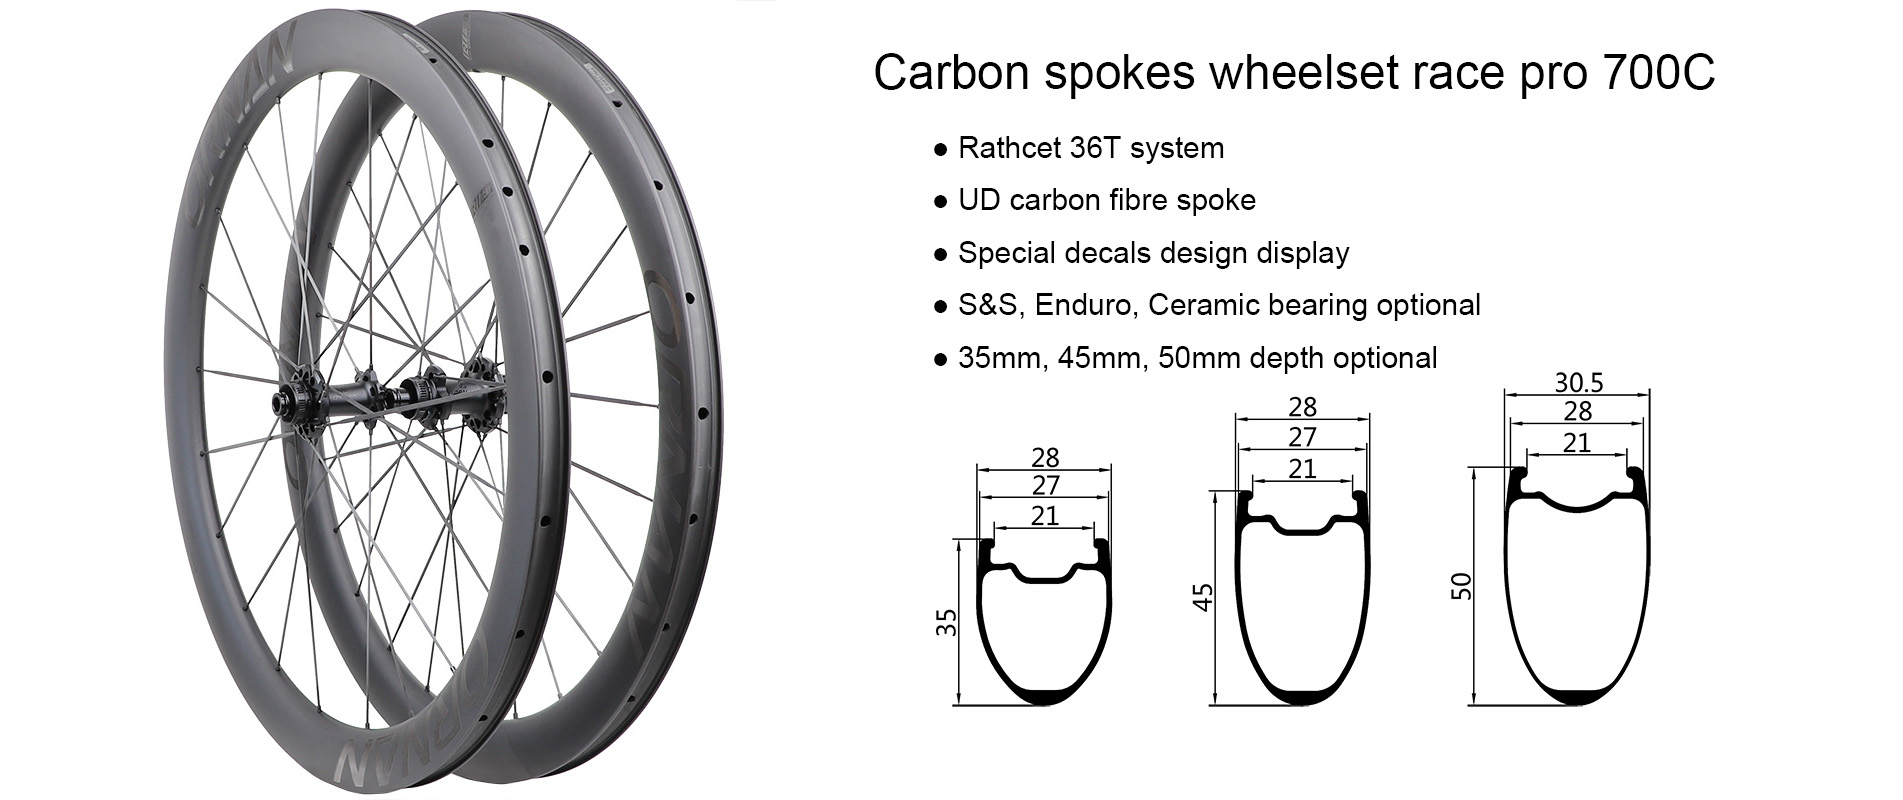 Ultralight UD Carbon Spokes Wheelset